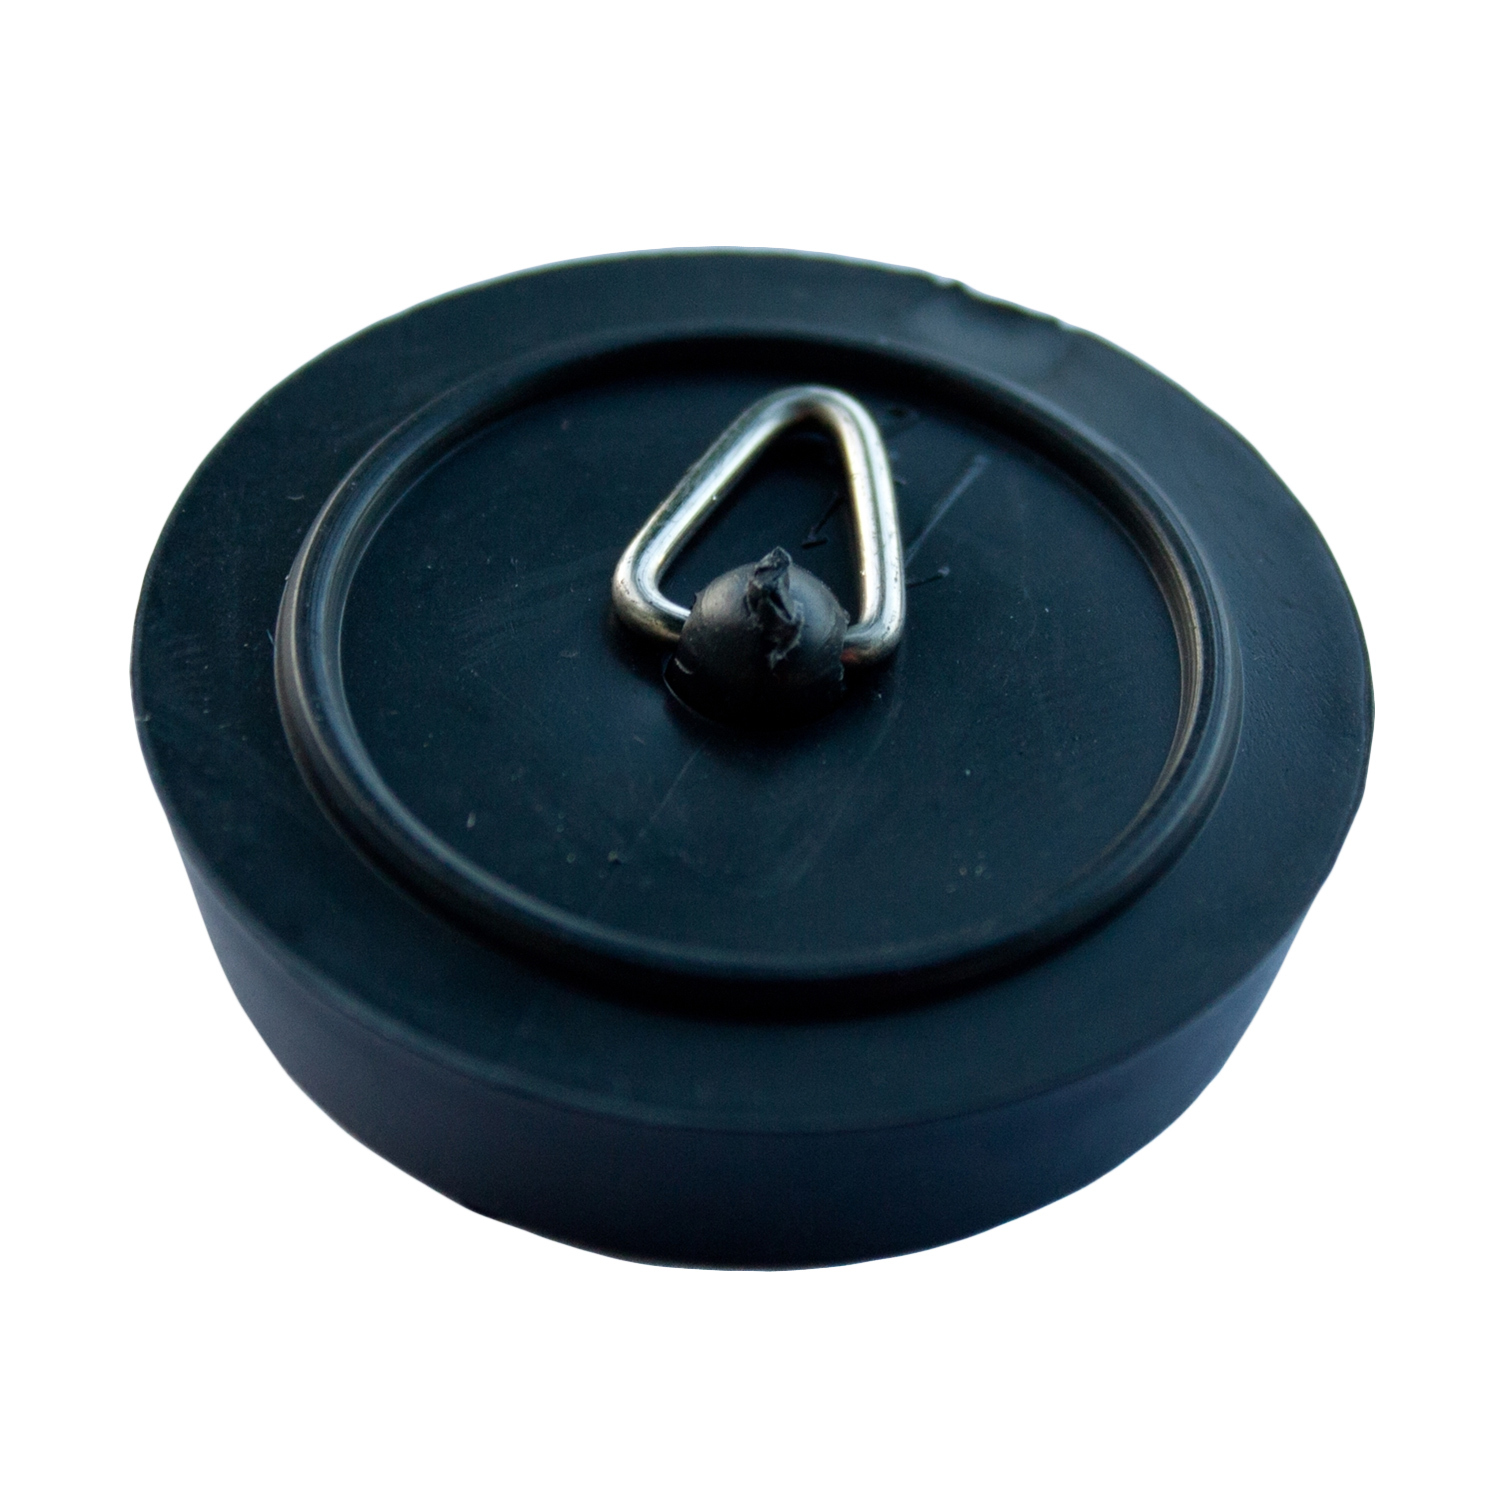 Oracstar Polythene Sink Plug - Black / 38mm Image